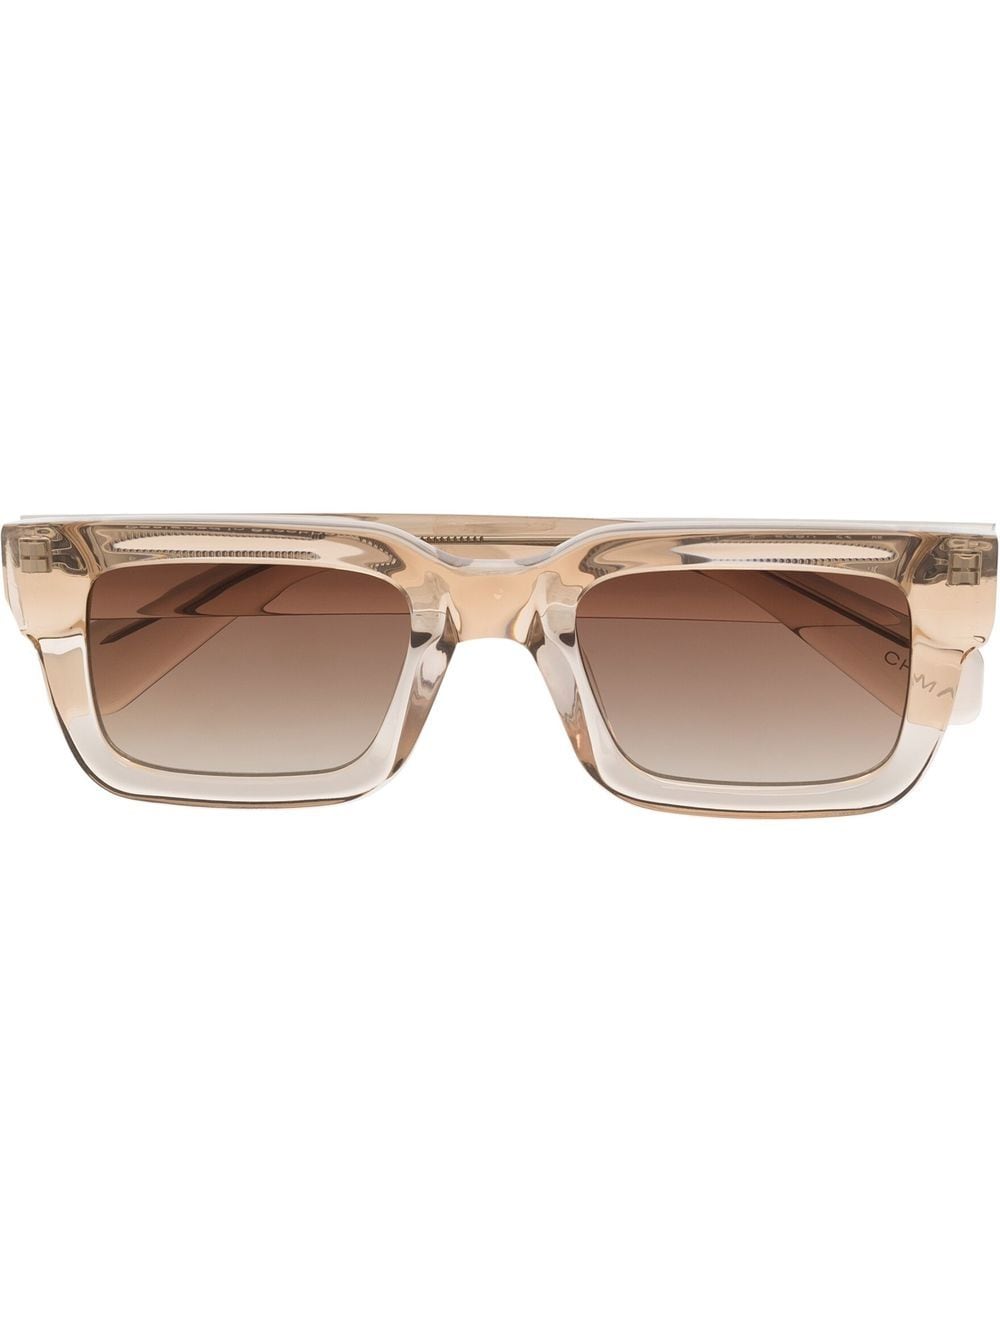 05 rectangle-frame sunglasses